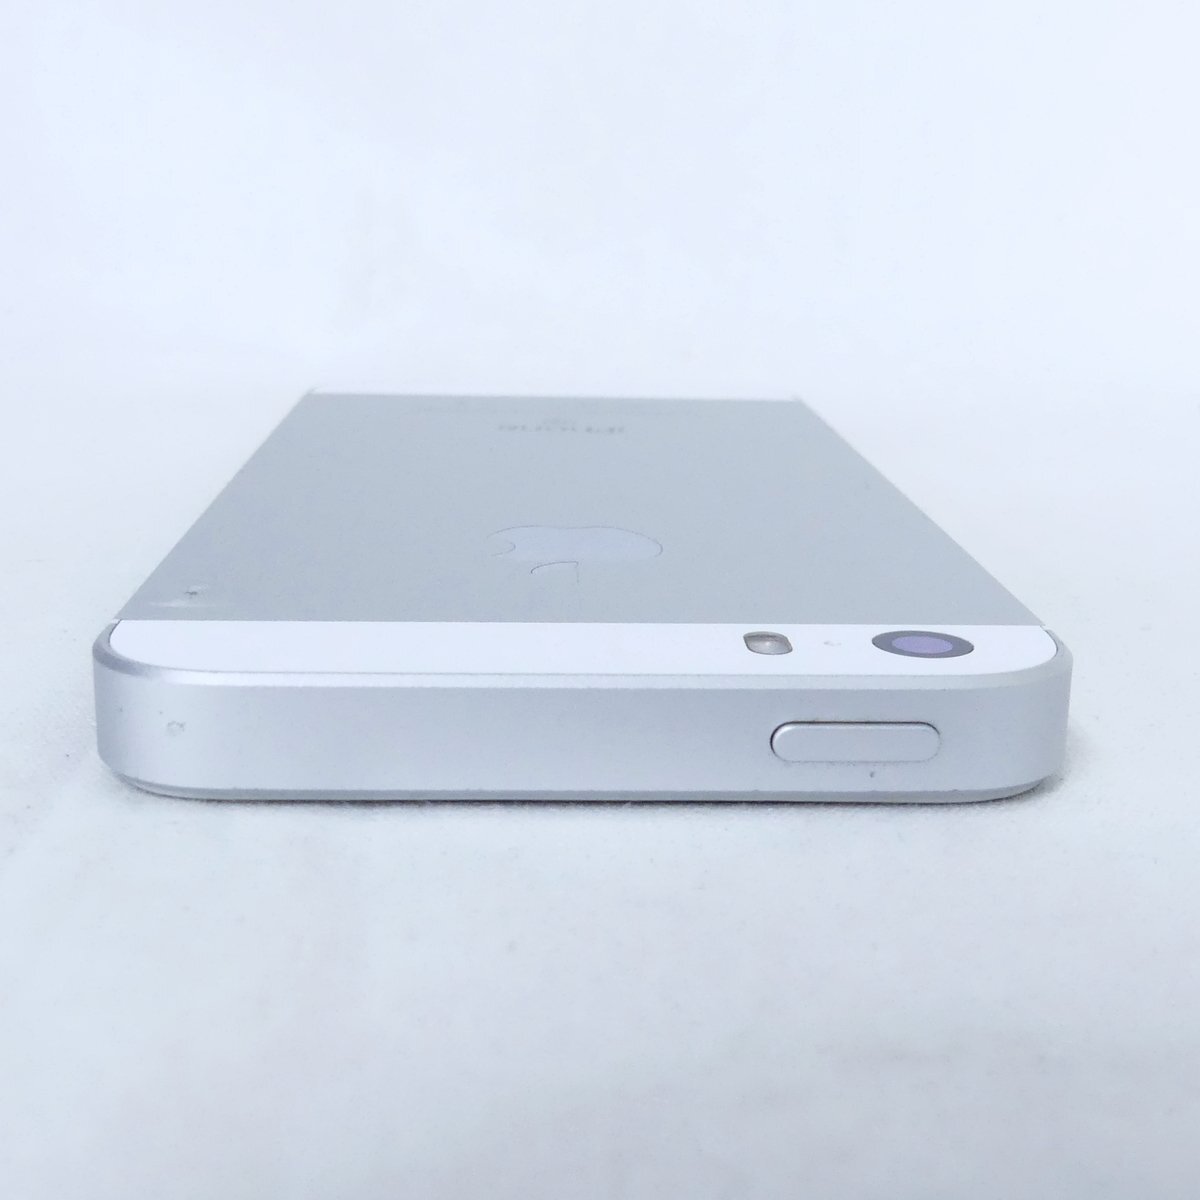 iPhoneSE 第1世代 シルバー 64GB TouchID反応OK バッテリー最大容量82% ドコモ SIMロックなし 判定○ USED /2404C_画像3